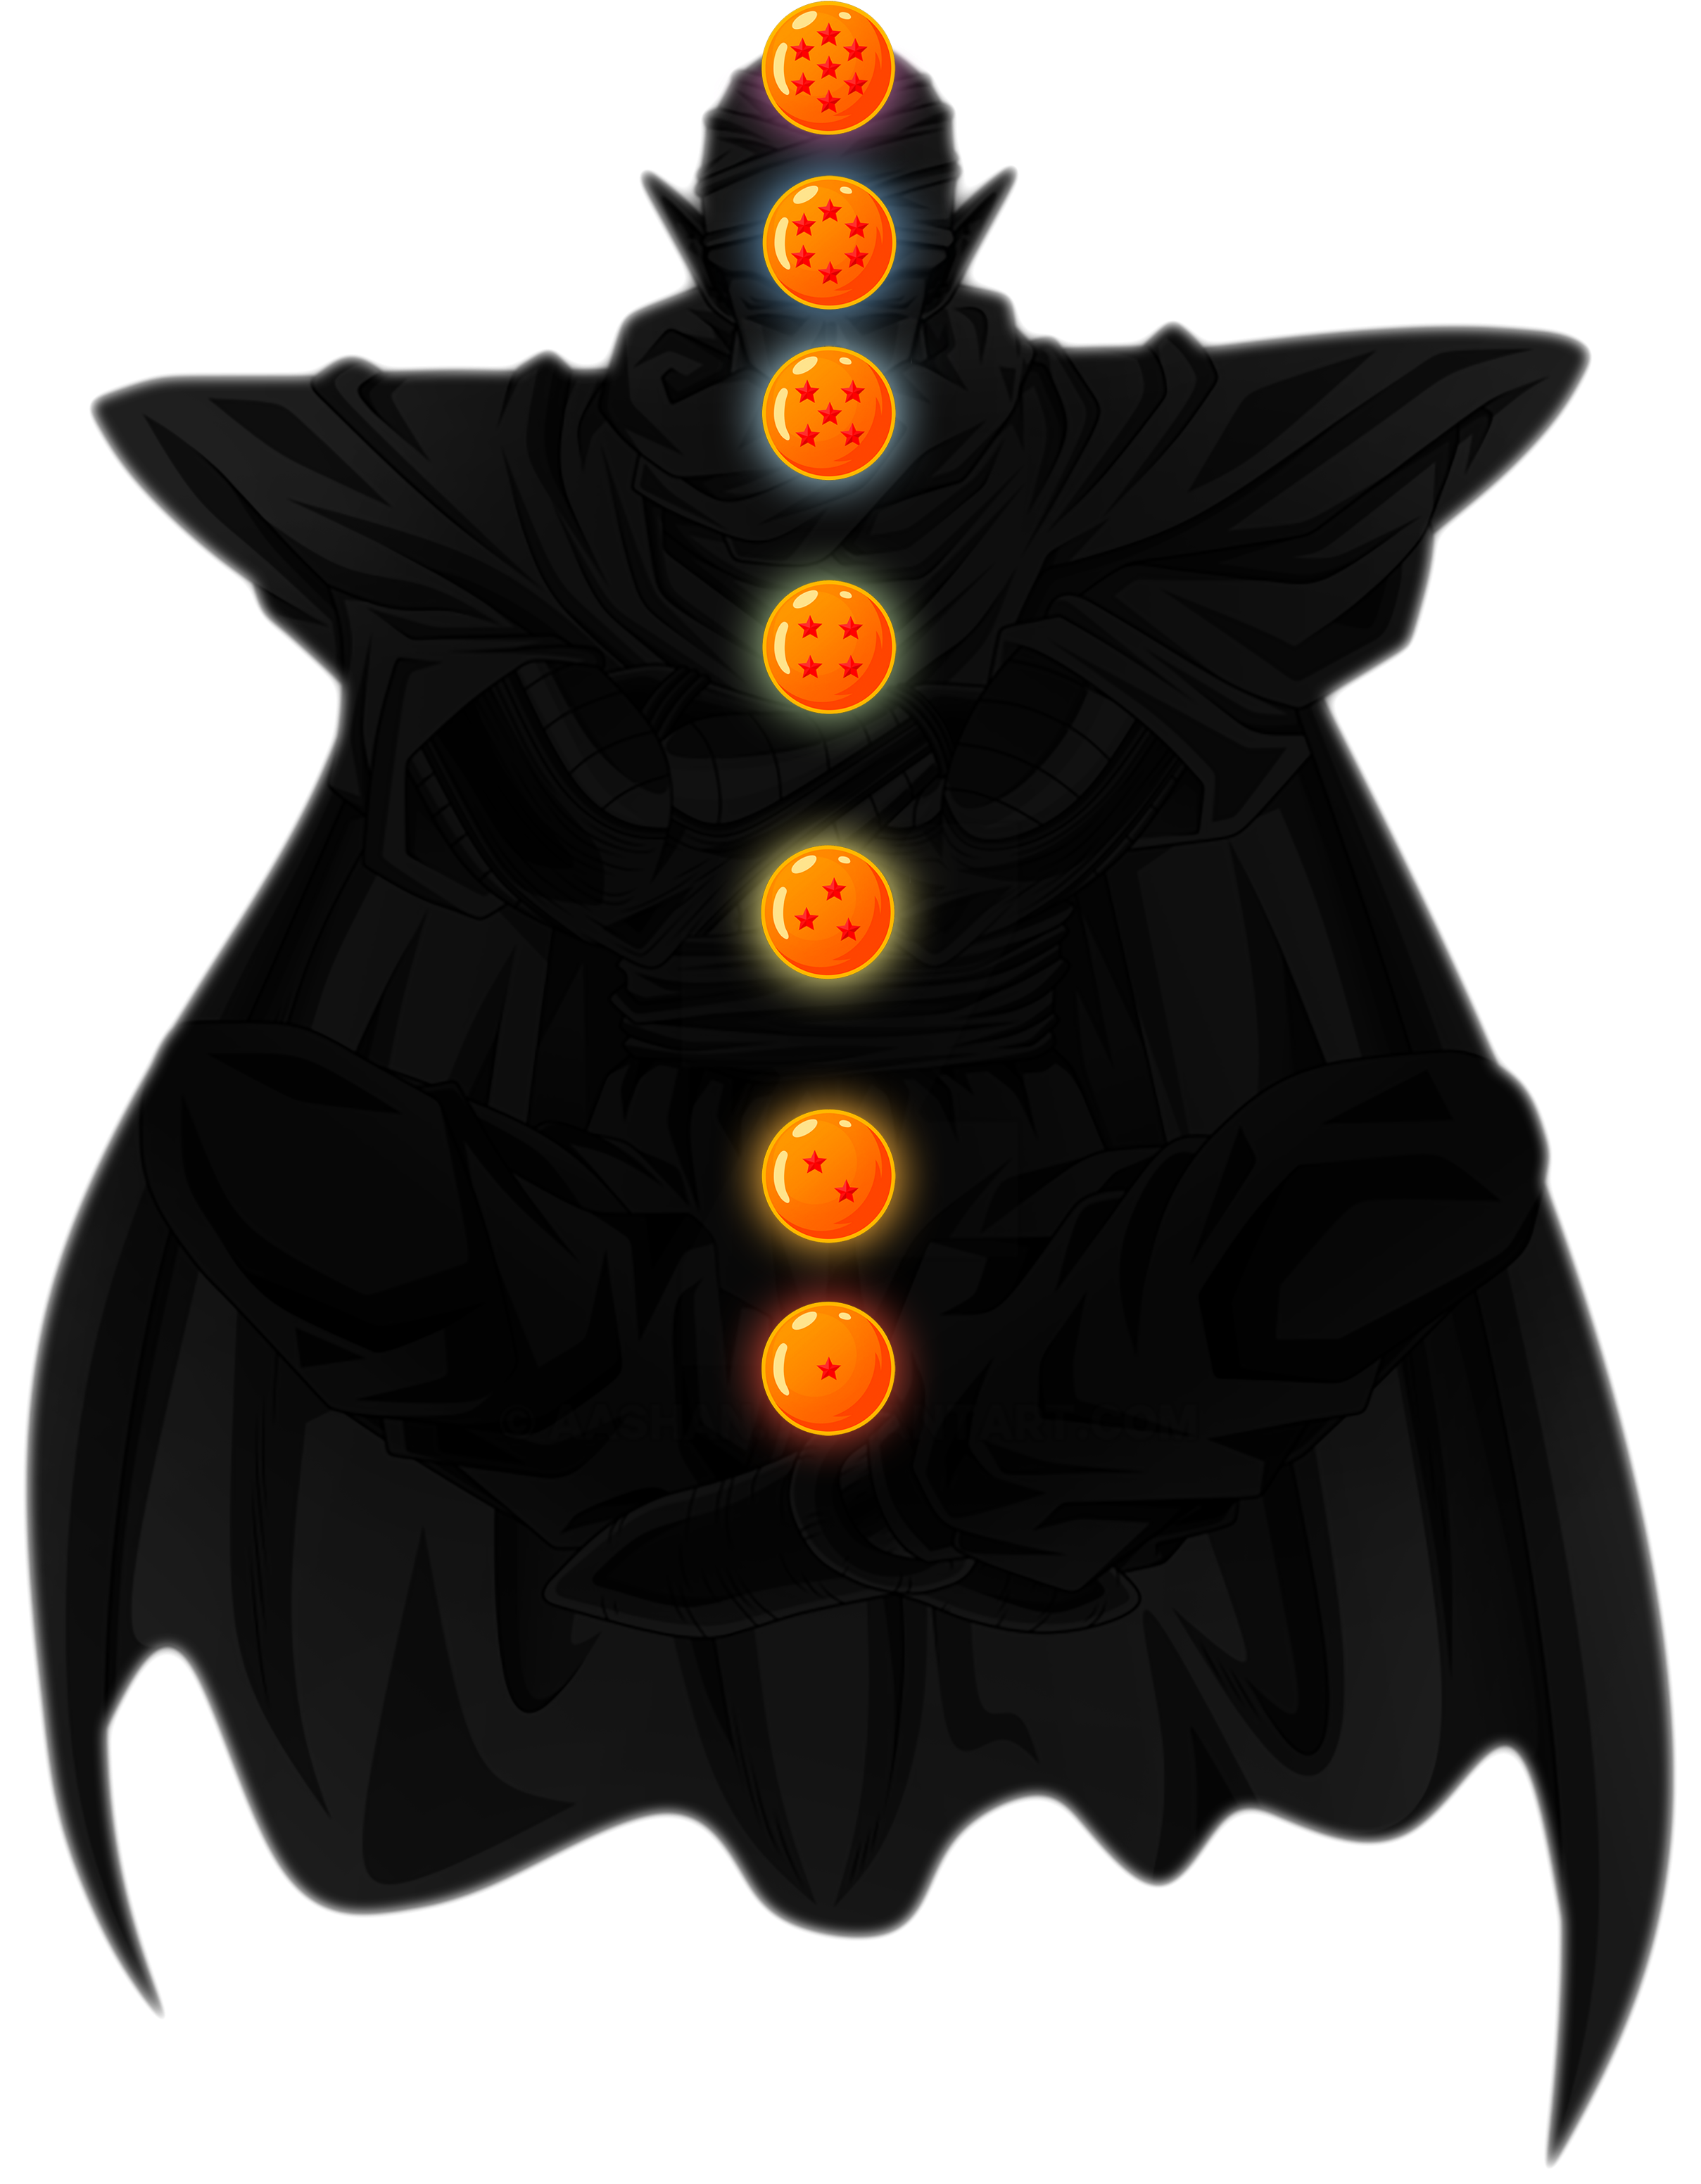 Piccolo Meditation Artwork With The 7 Dragonballs As - Emblem (2481x3141), Png Download